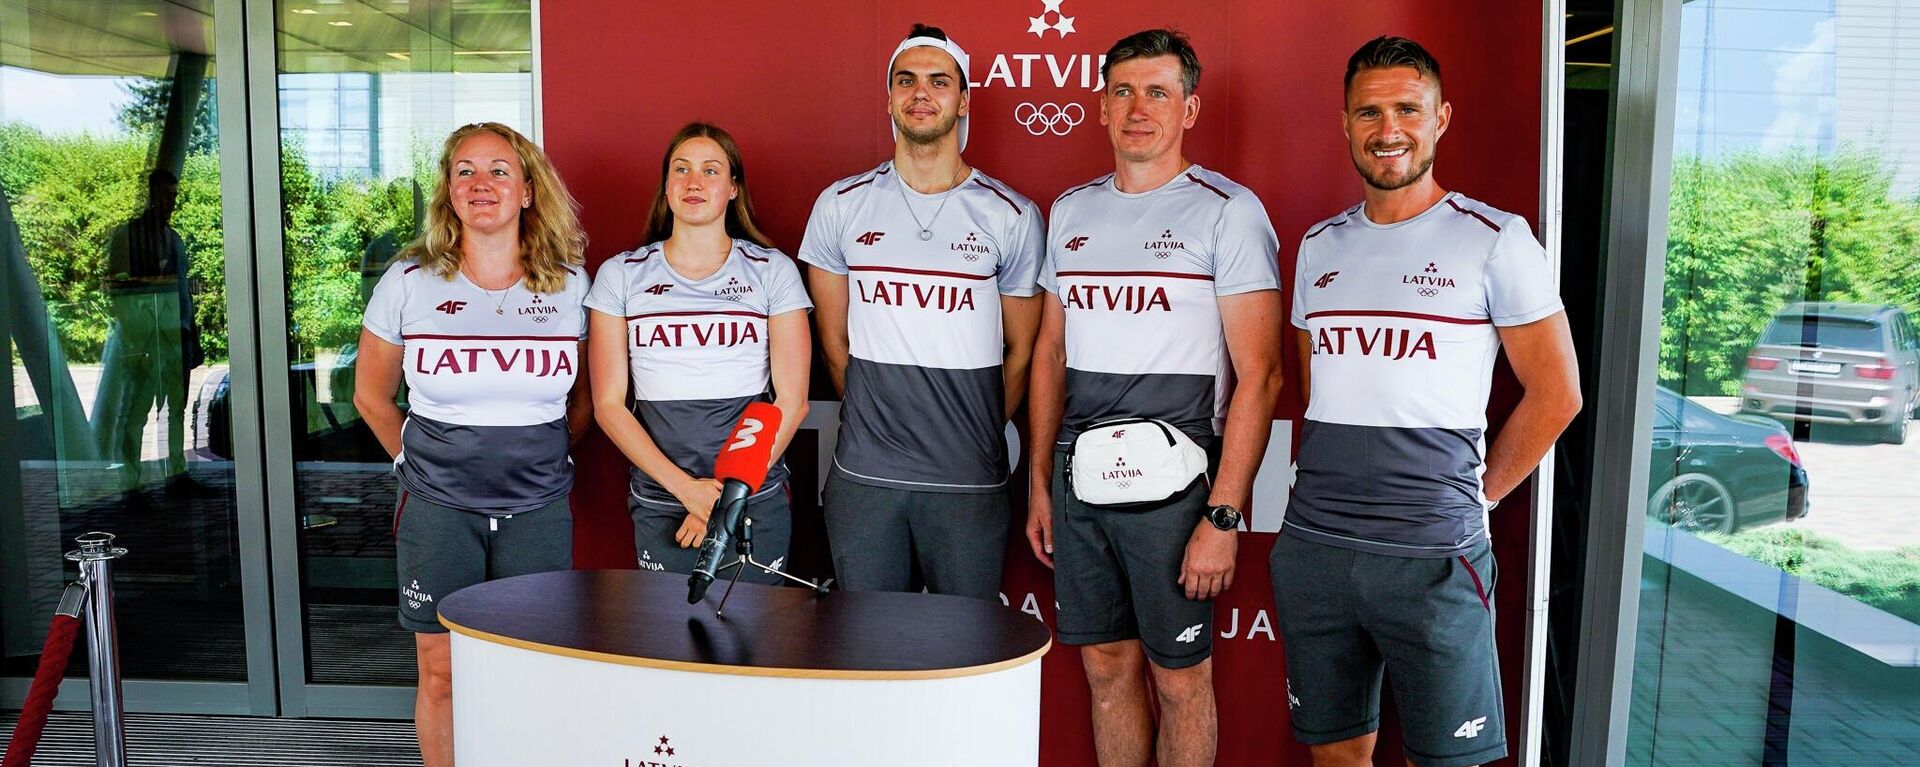 Латвию на Олимпийских играх в Токио представят пловцы Иева Малюка (вторая слева) и Даниил Бобров (третий слева) - Sputnik Латвия, 1920, 18.07.2021